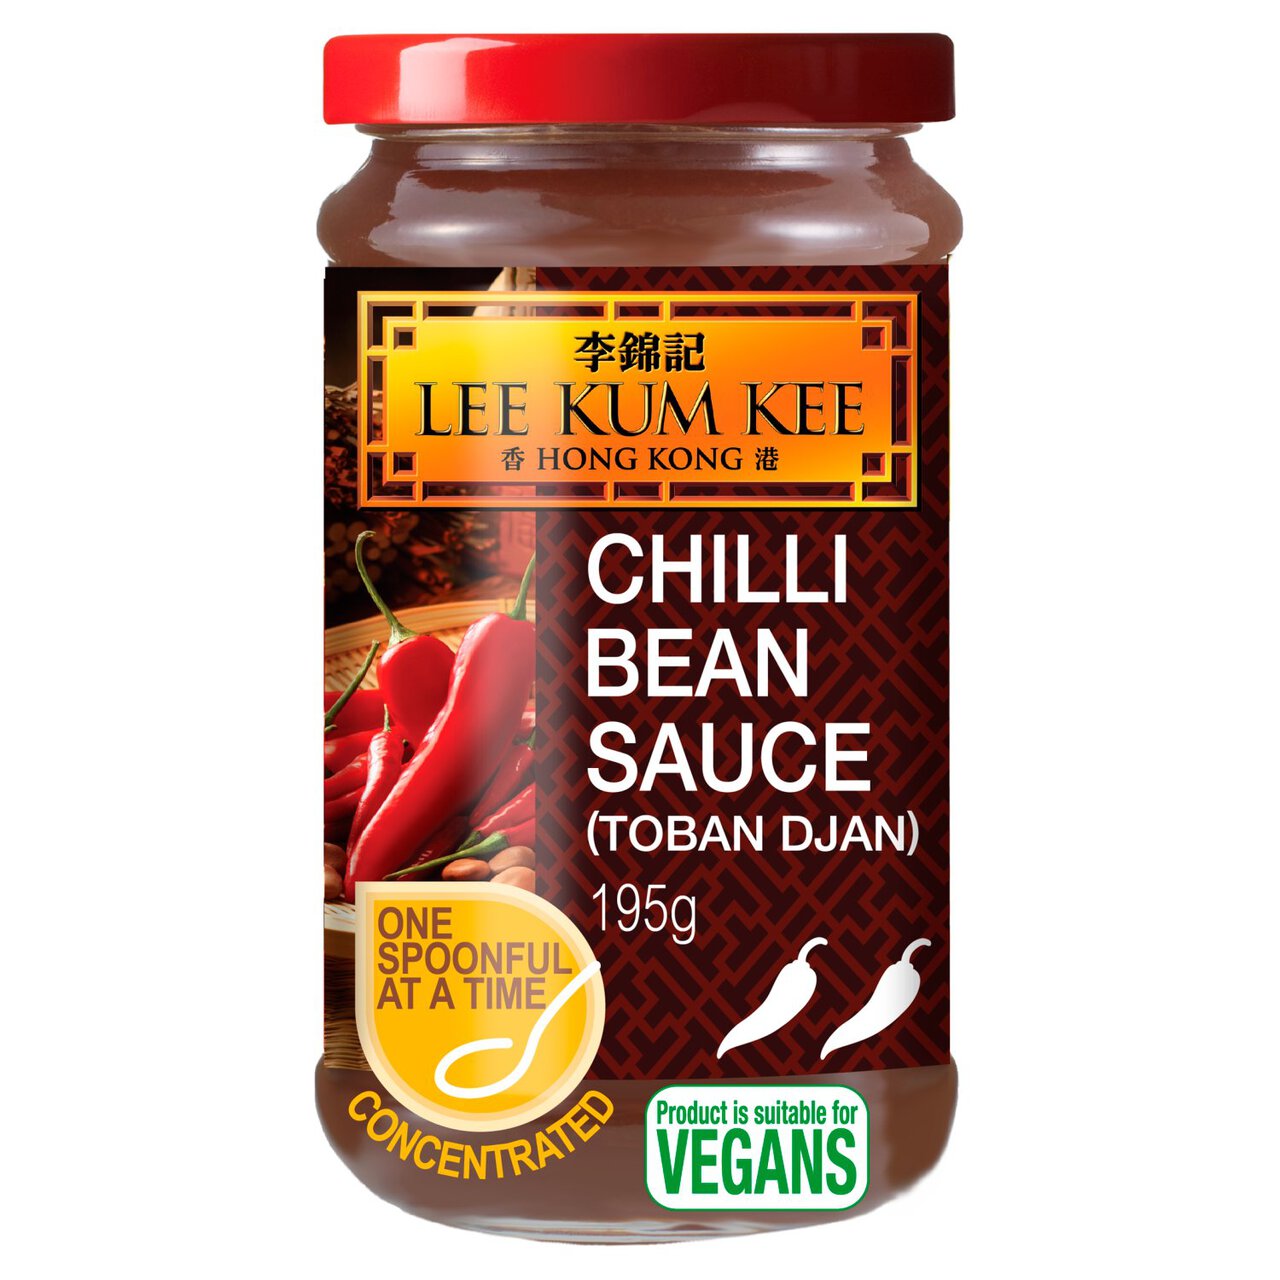 Lee Kum Kee Chilli Bean Sauce 195g